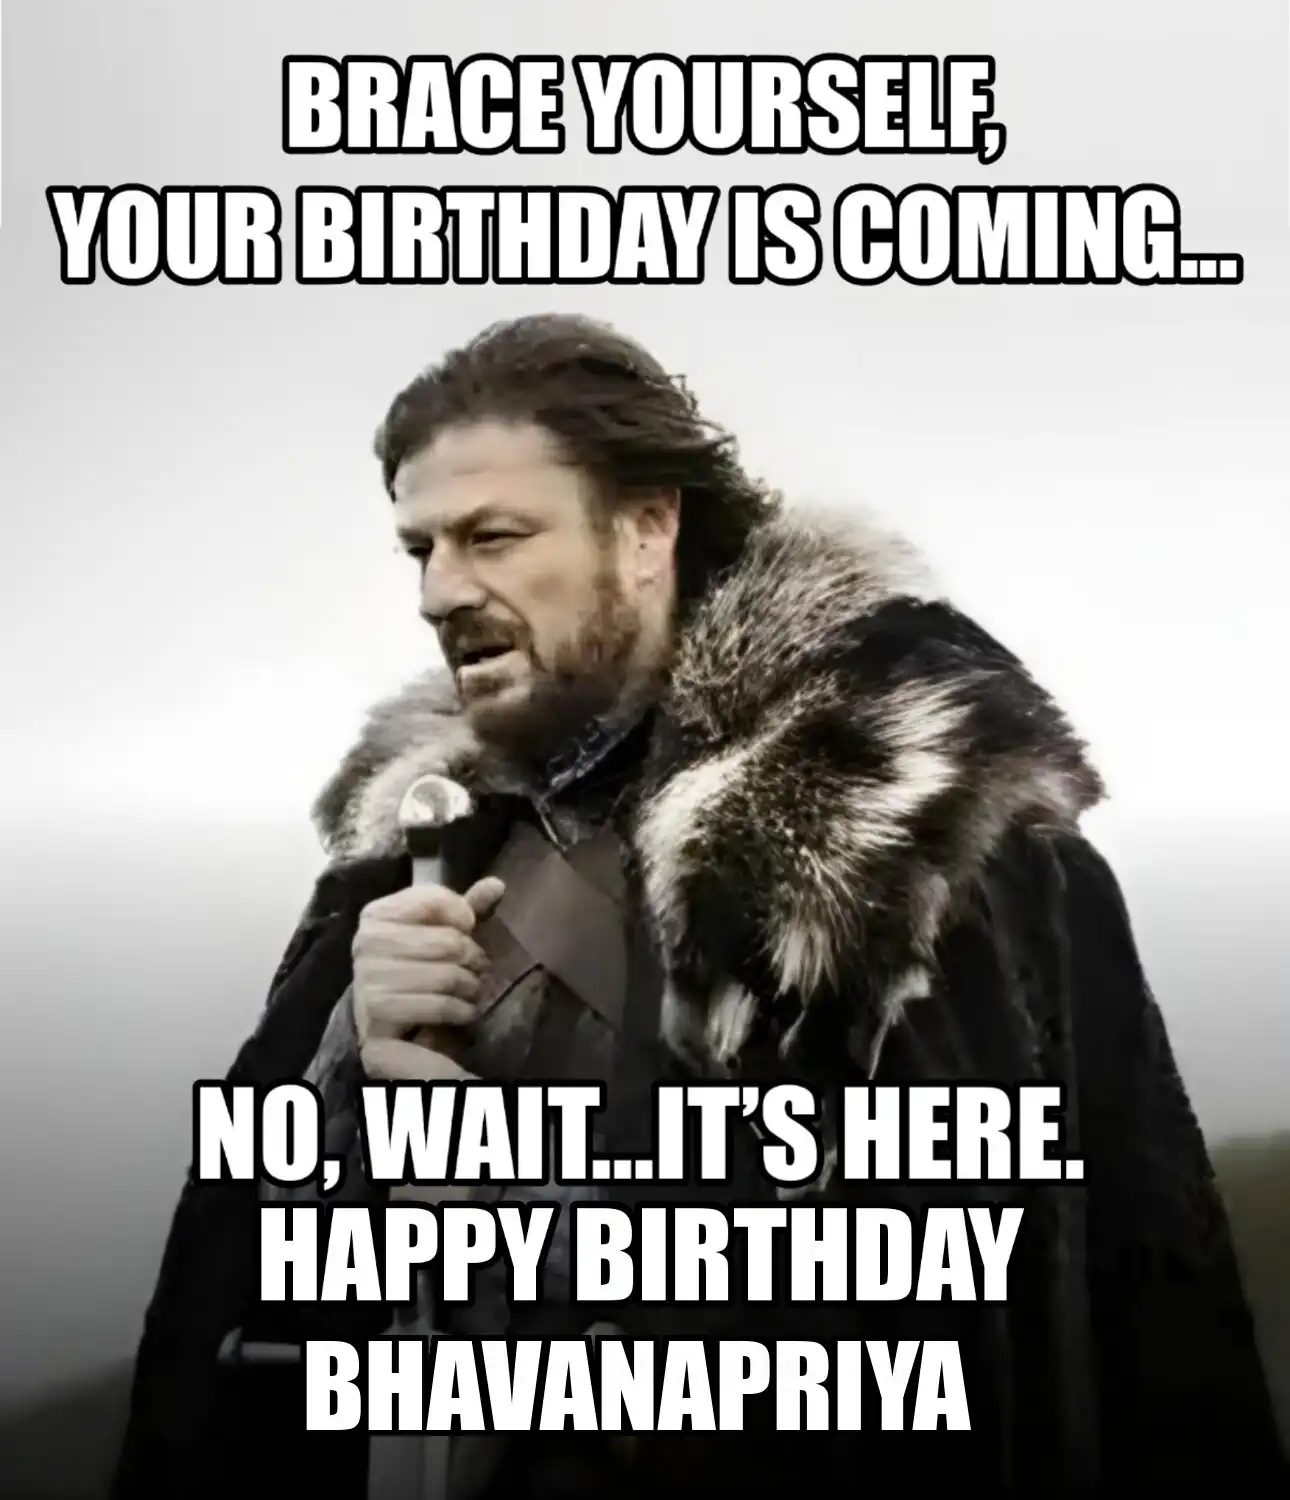 Happy Birthday Bhavanapriya Brace Yourself Your Birthday Is Coming Meme